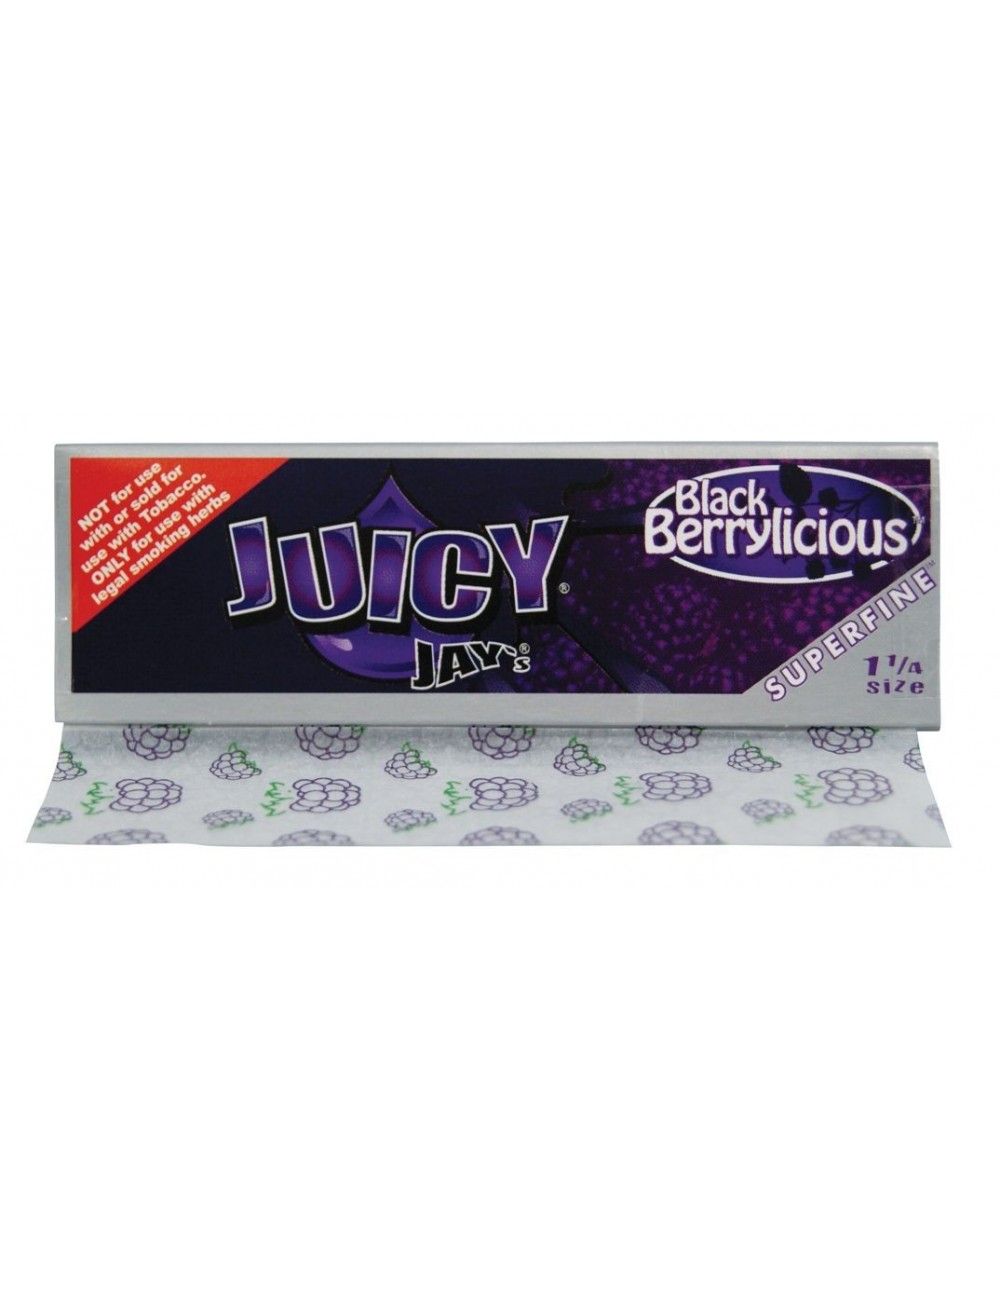 Juicy Jay's Ultra Fine Blackberrylicious